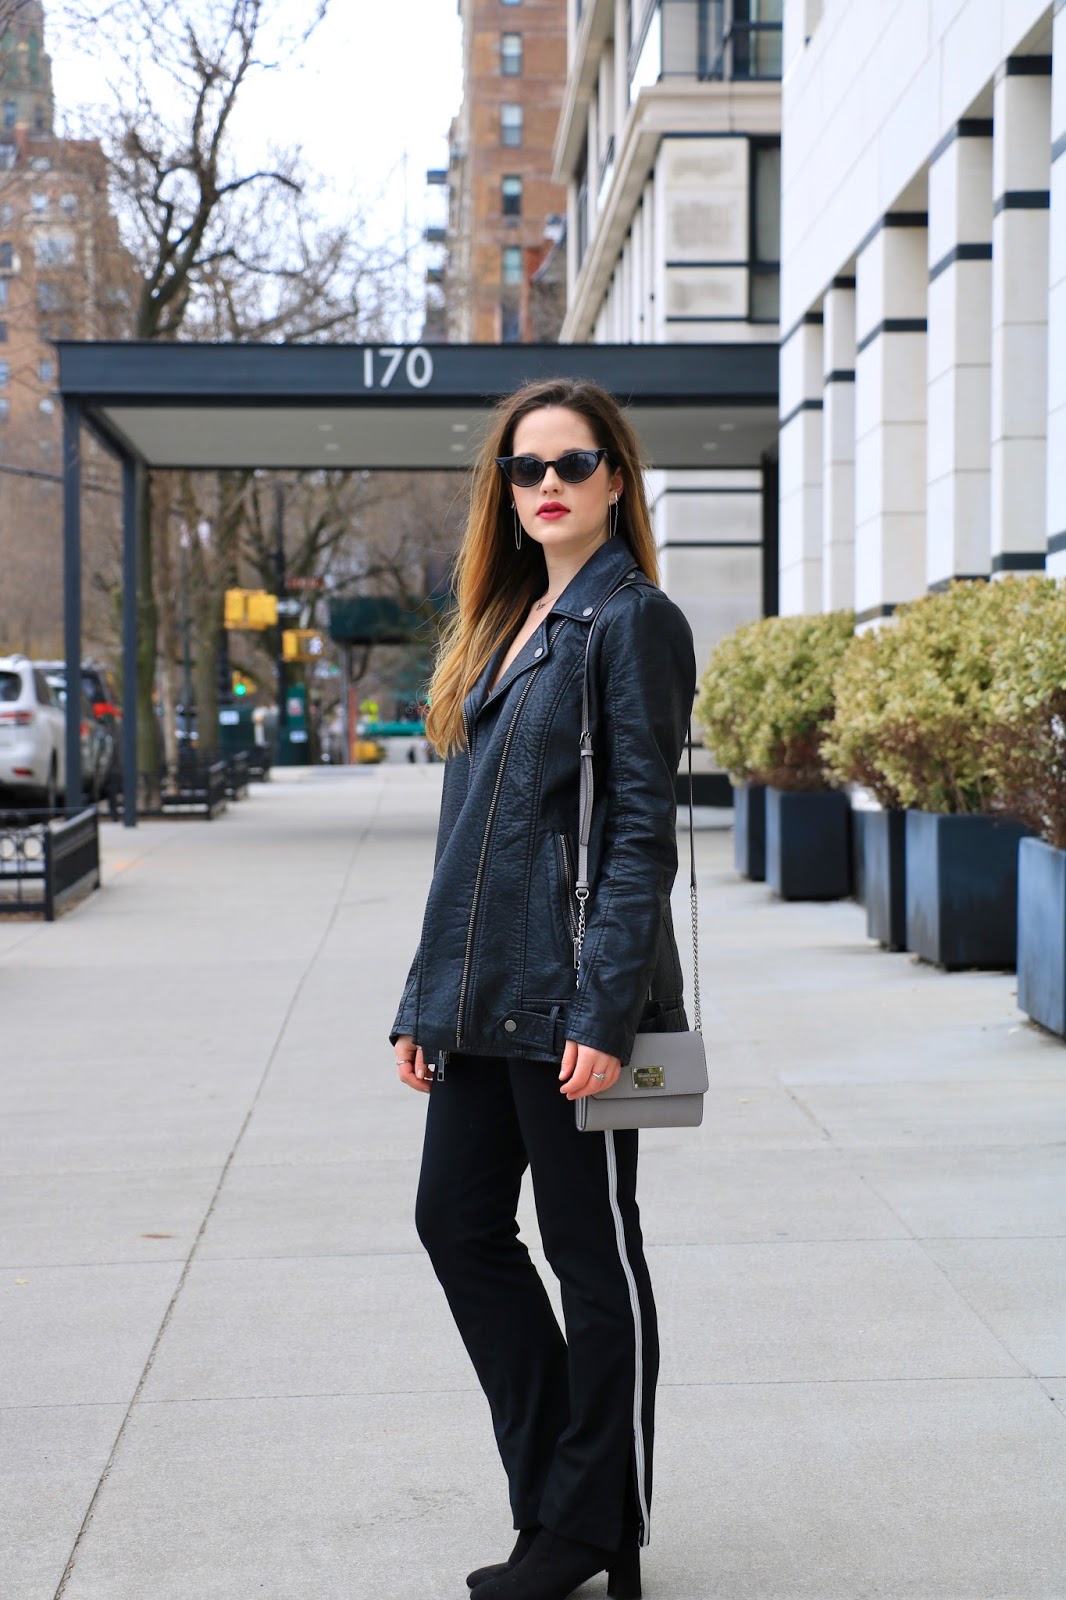 Nyc fashion blogger Kathleen Harper's spring street style